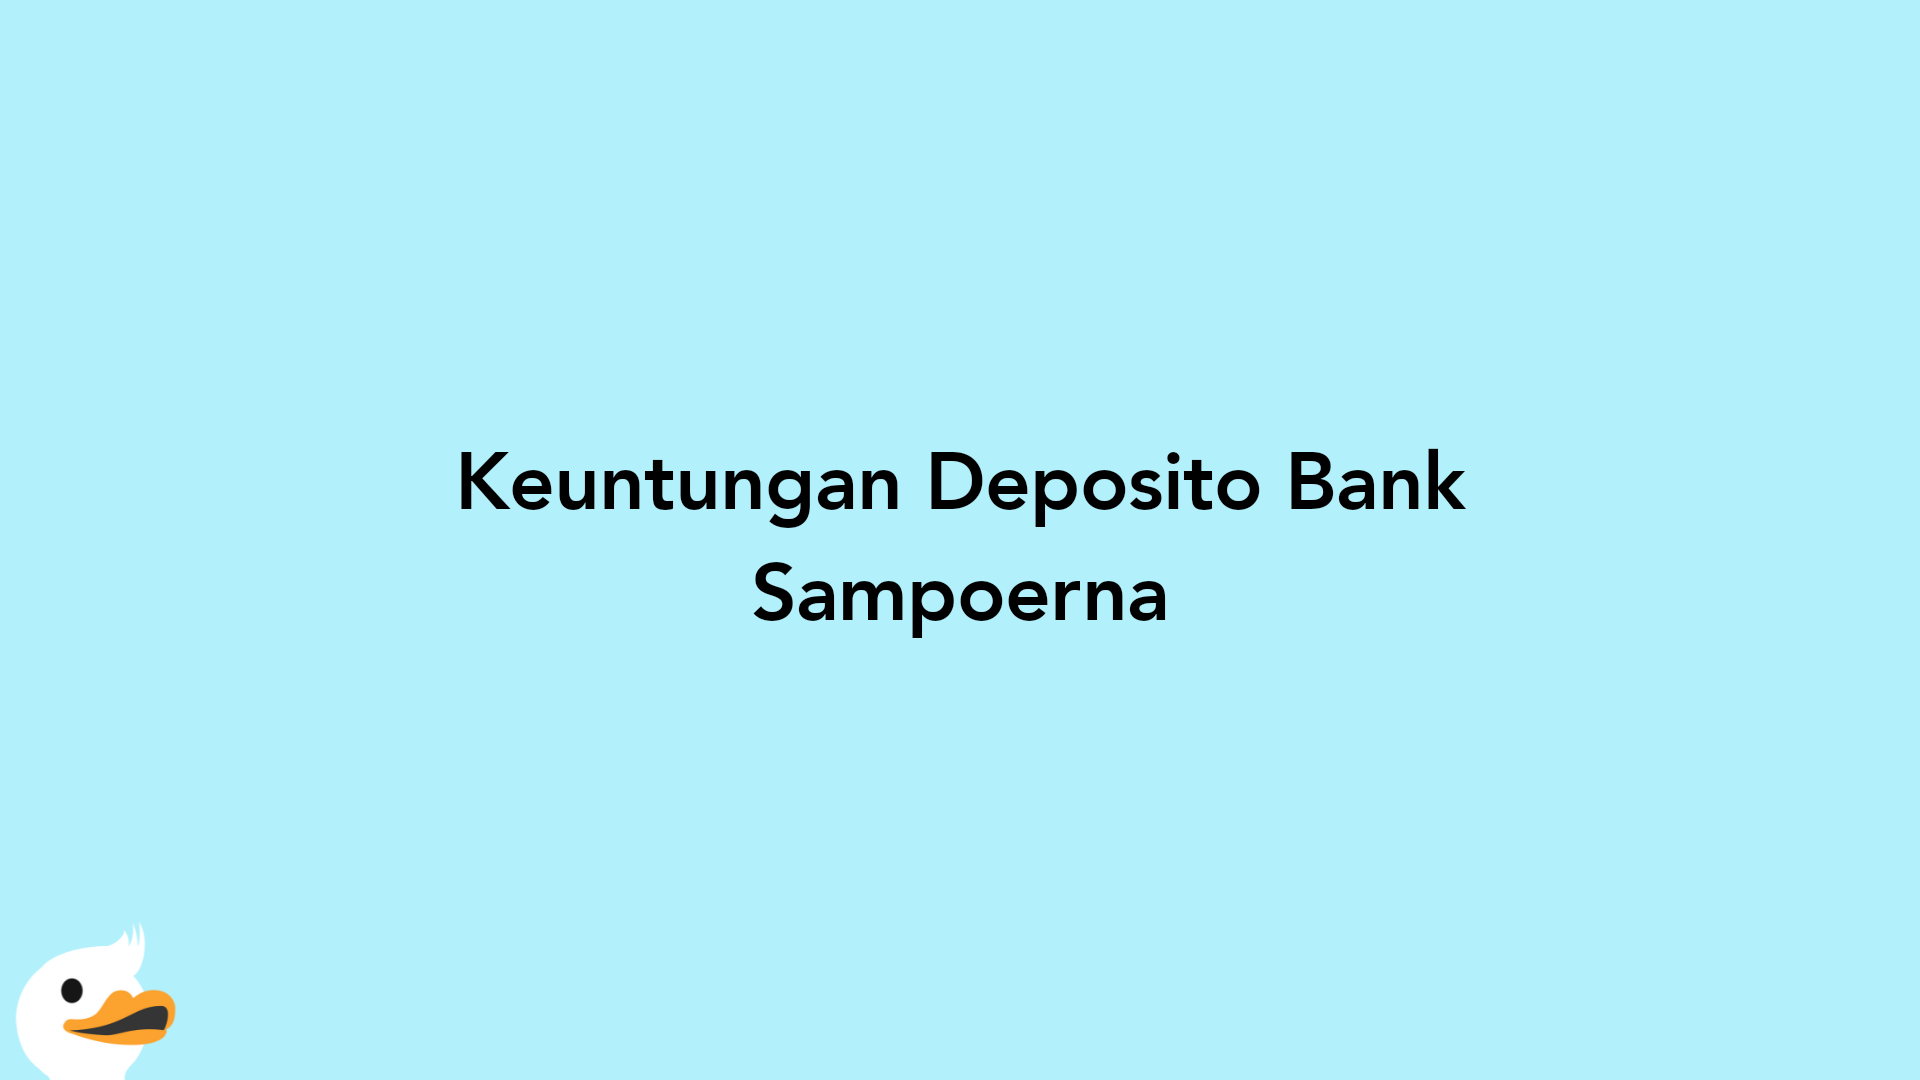 Keuntungan Deposito Bank Sampoerna